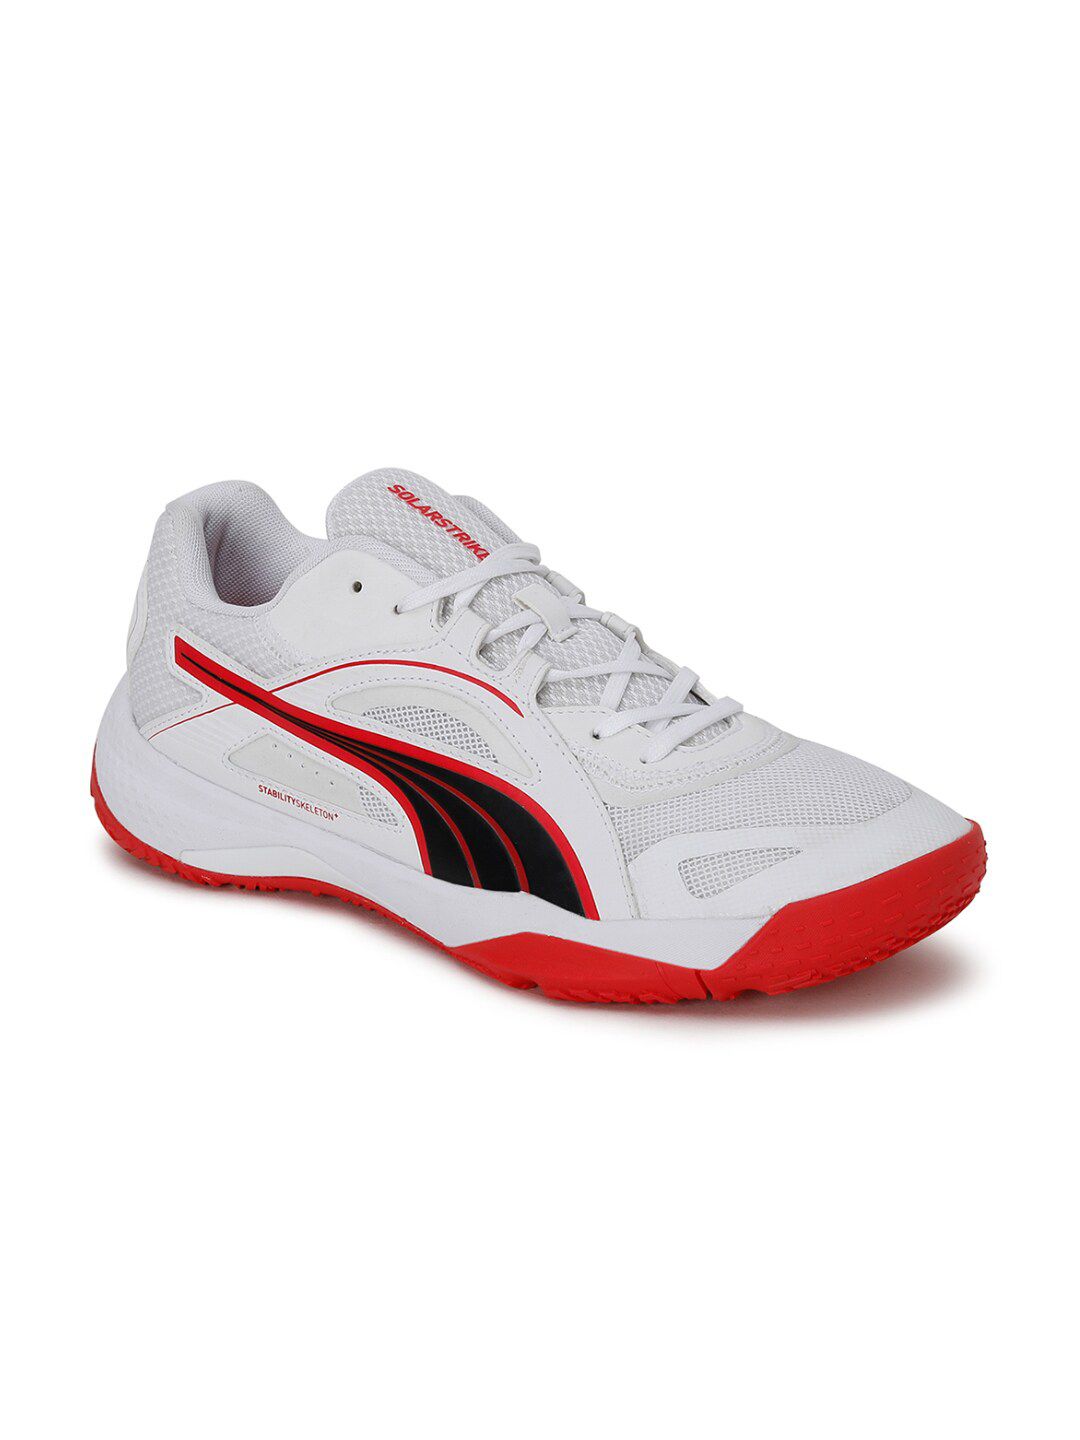 Puma Unisex White Mesh Badminton Non-Marking Shoes Price in India